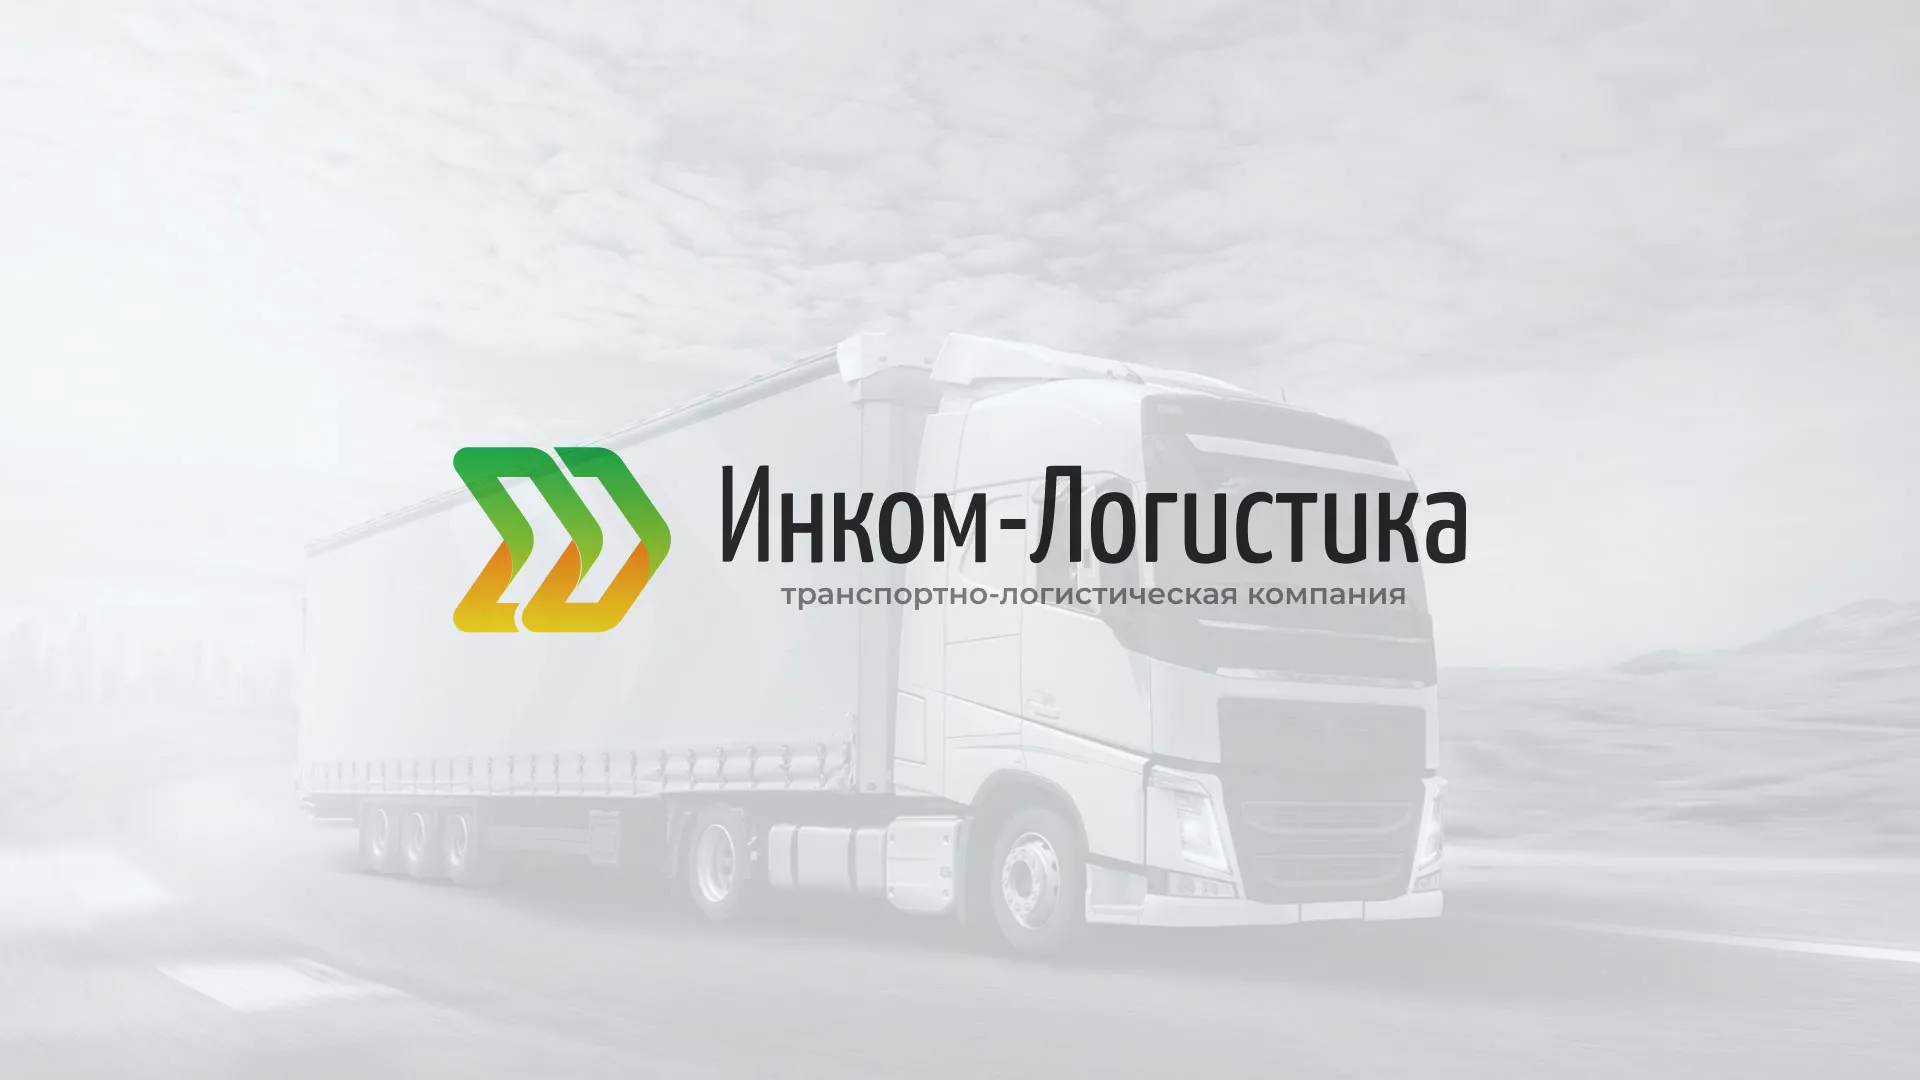 Разработка логотипа и сайта компании «Инком-Логистика» в Кувшиново